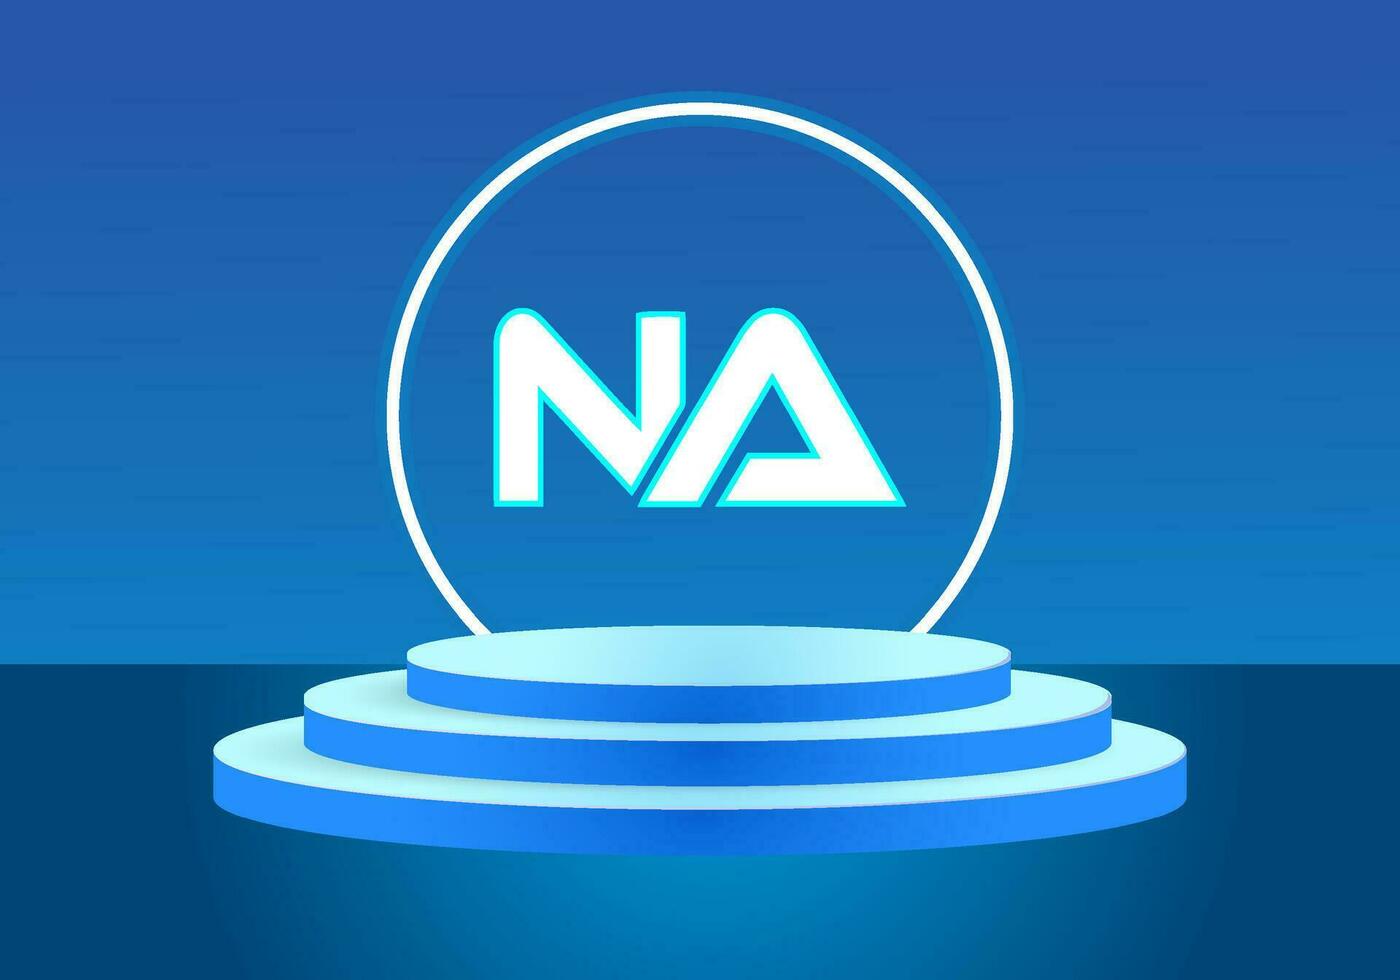 n / A logo blu design. vettore logo design per attività commerciale.